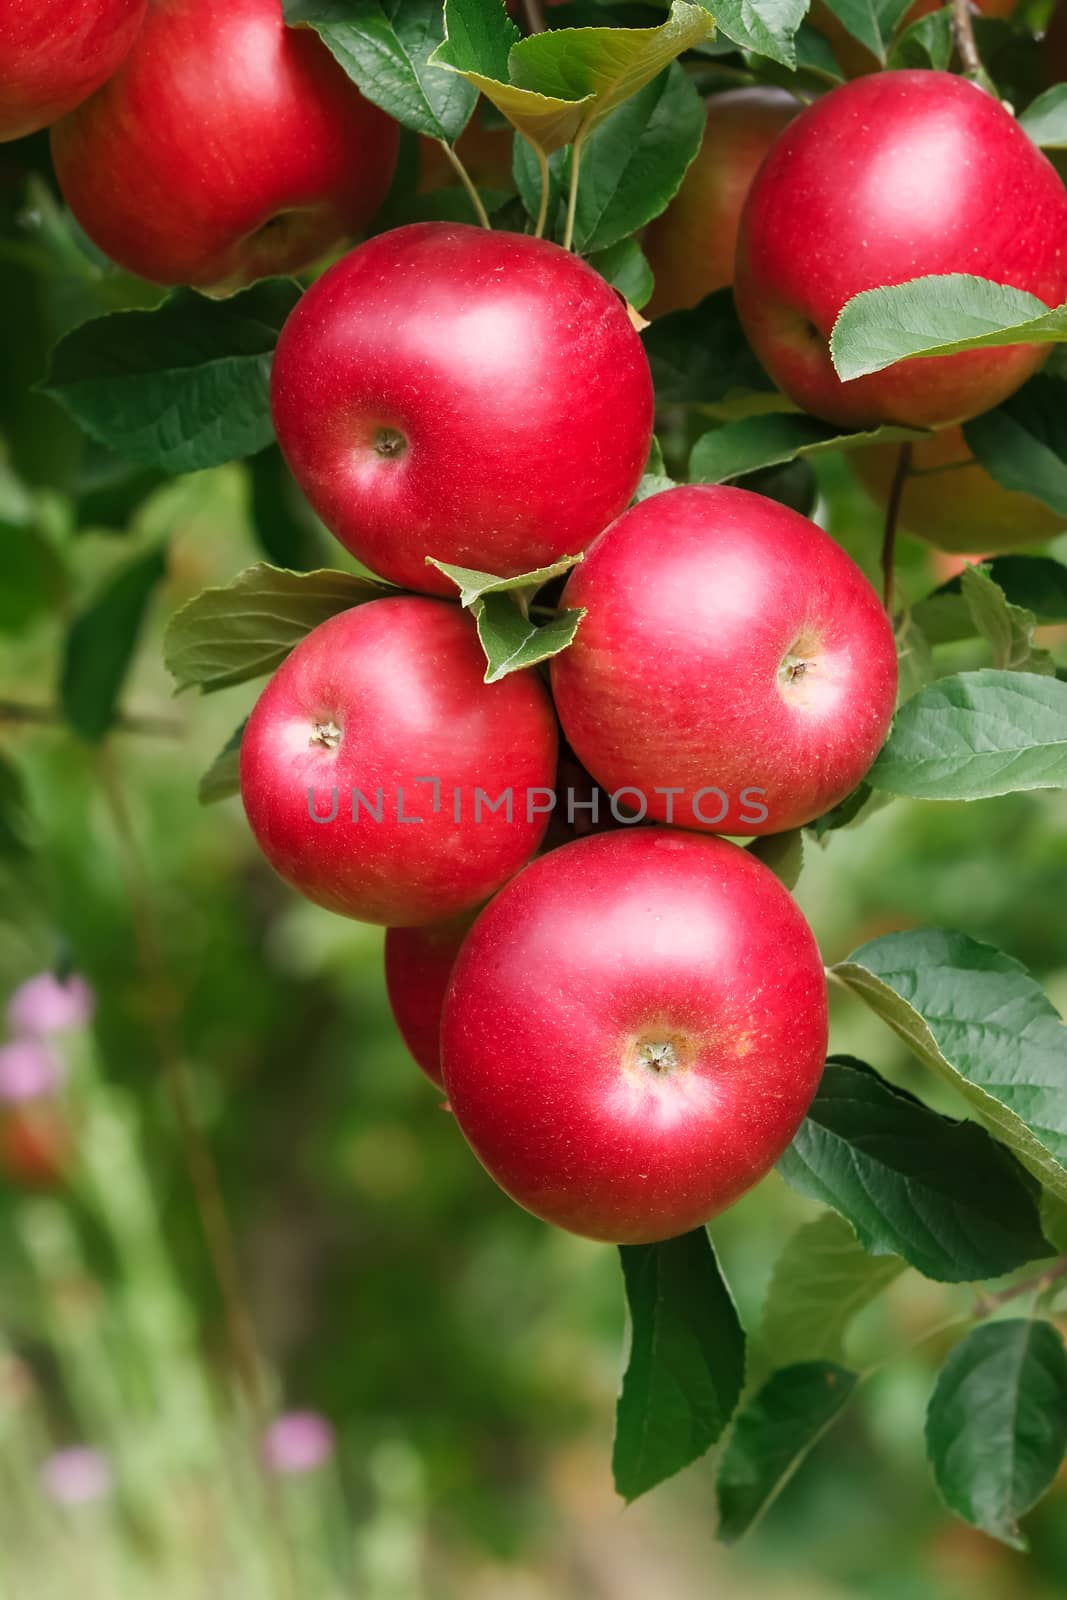 Red apples on apple tree branch by Slast20